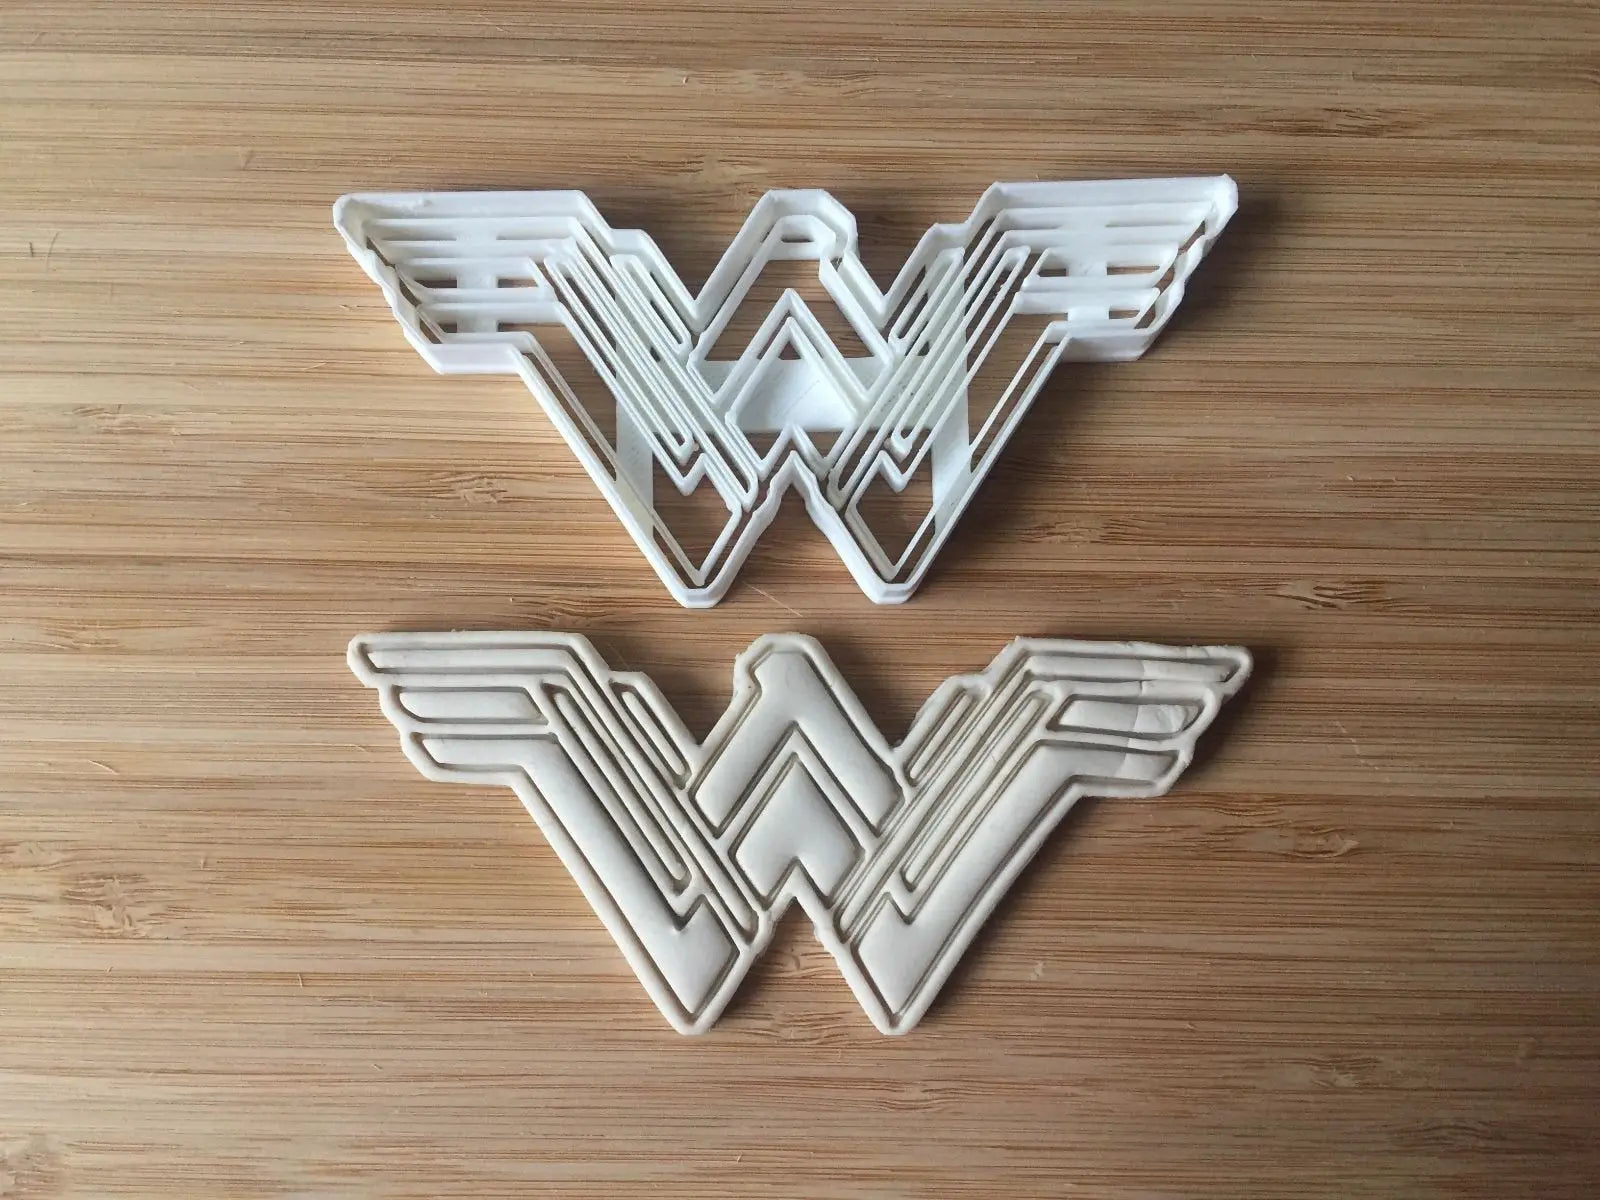 Wonderwoman Super Hero 006 Cookie Cutter Sugarcraft Cake Decorating UK Seller MEG cookie cutters